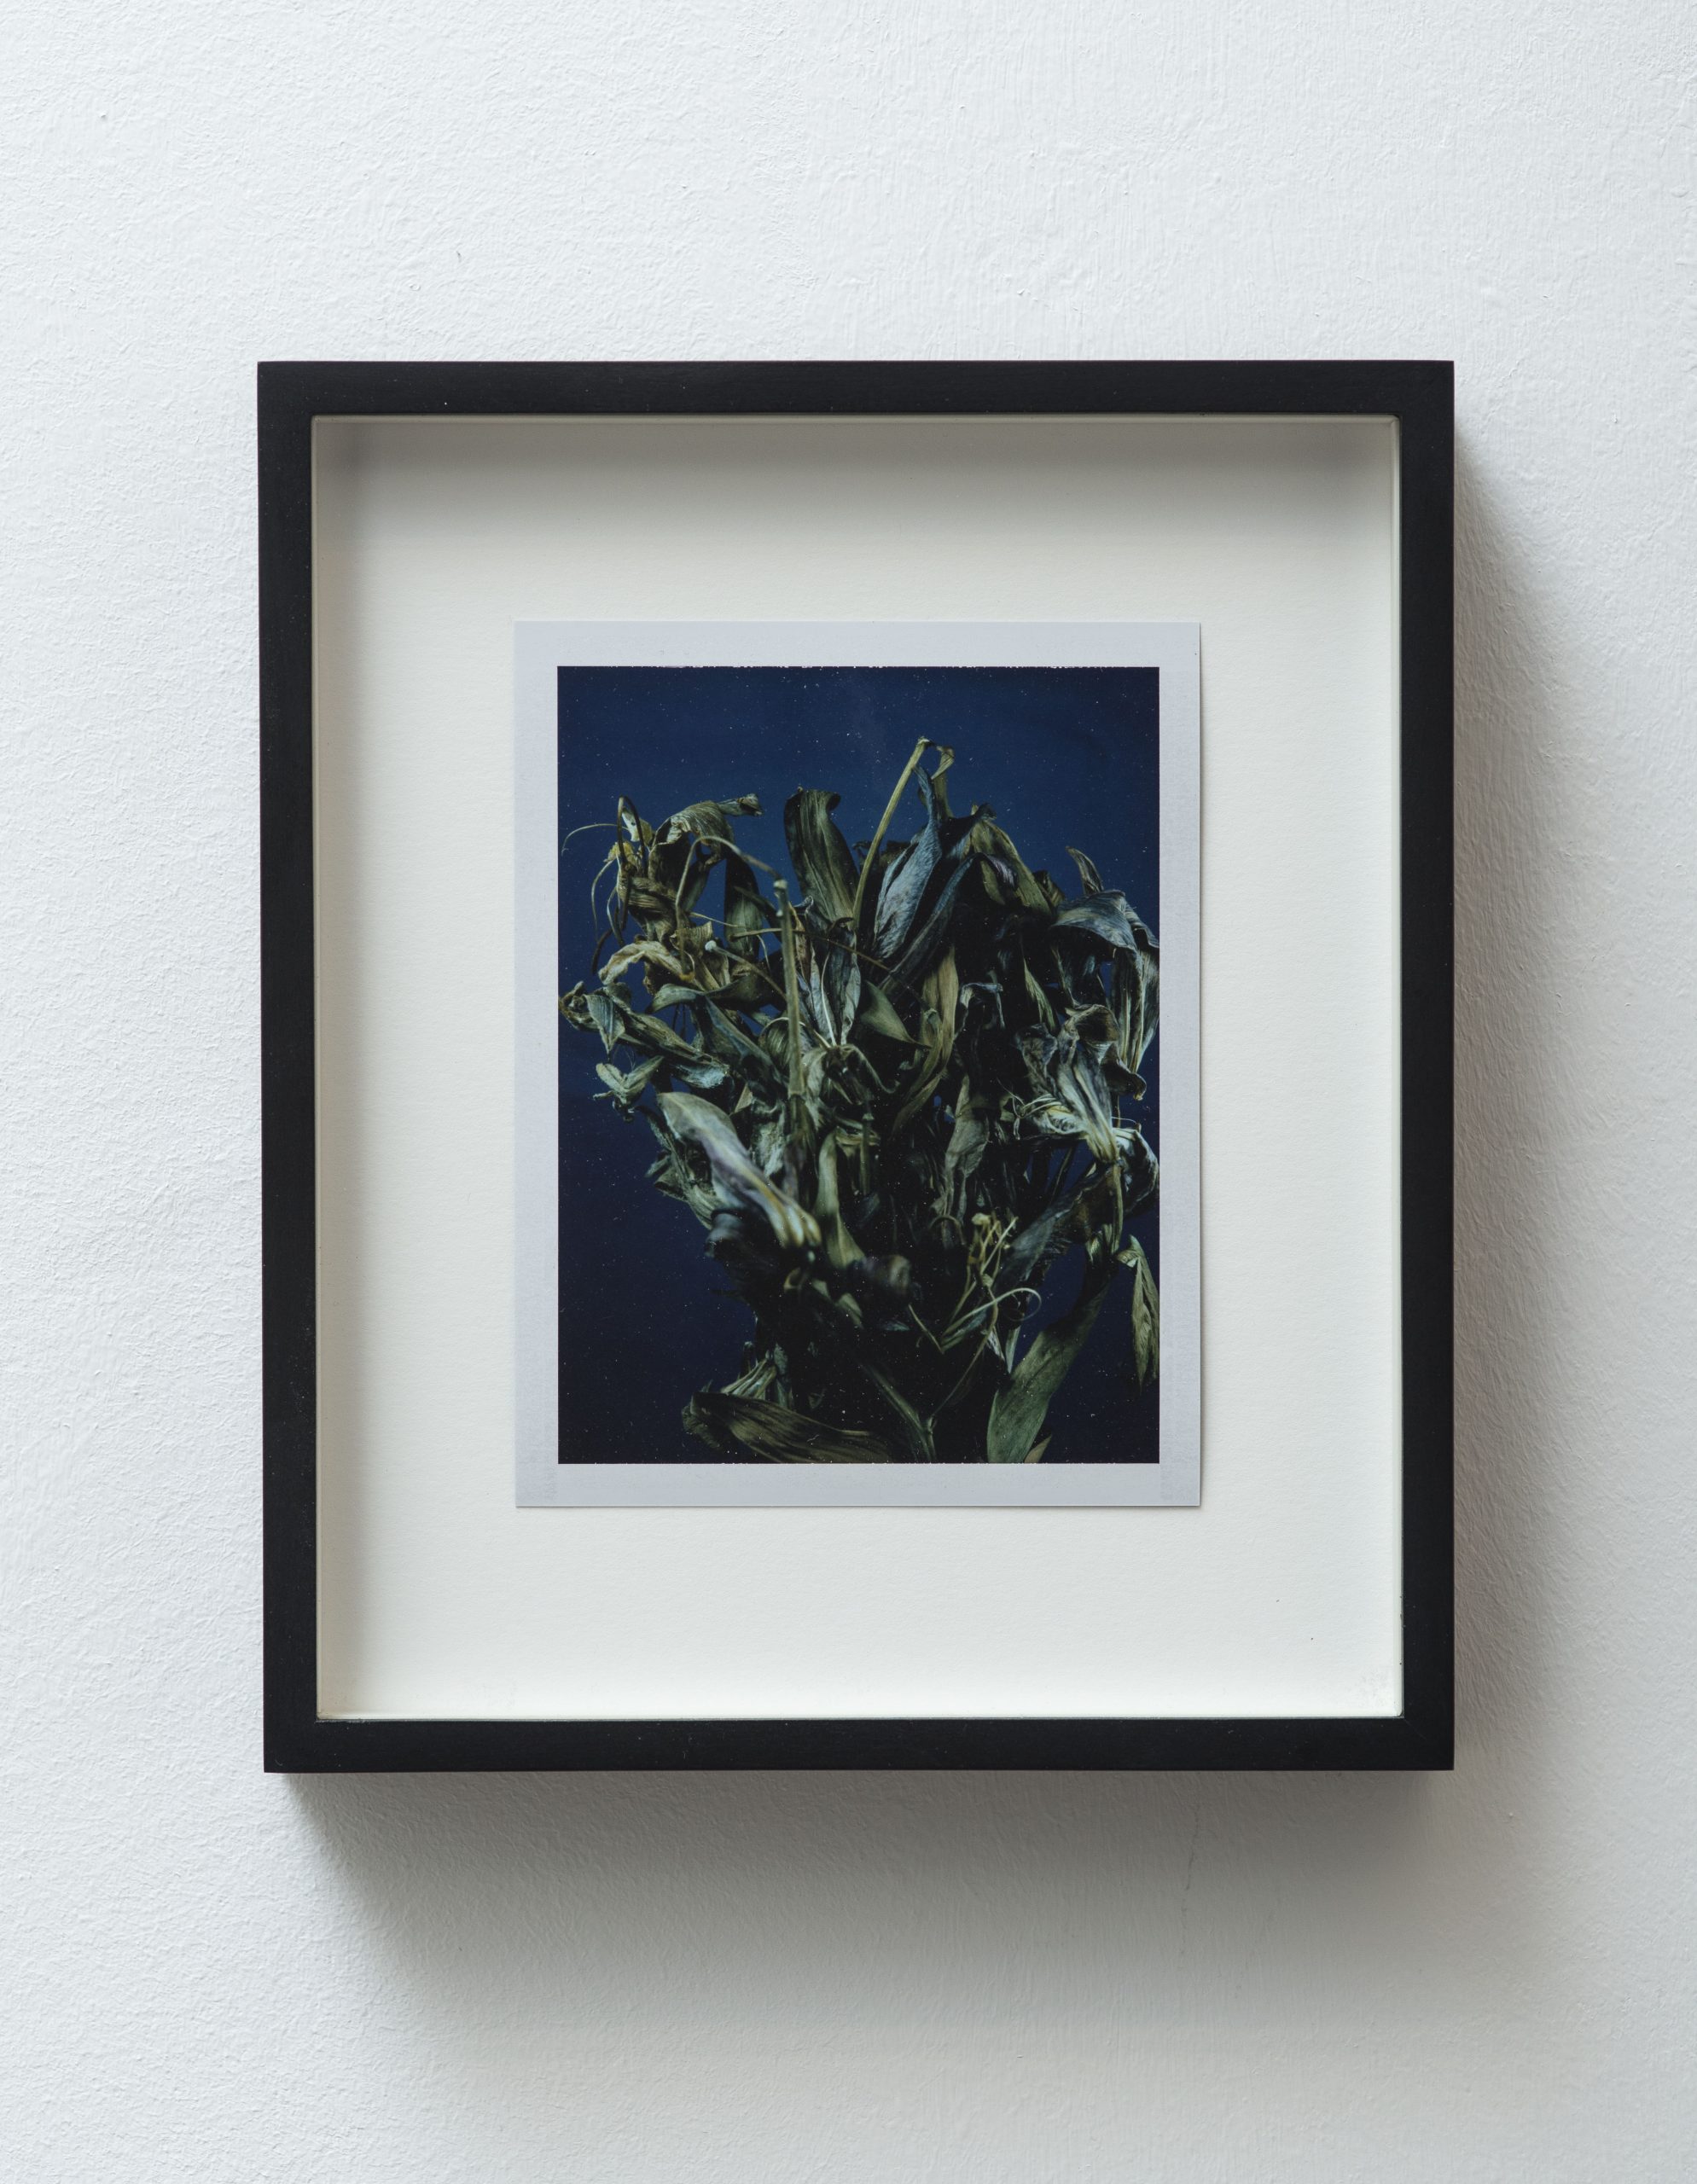 Sam Falls, Untitled (Life and death, asiatic lilies), 2014. Photo by Giorgio Benni